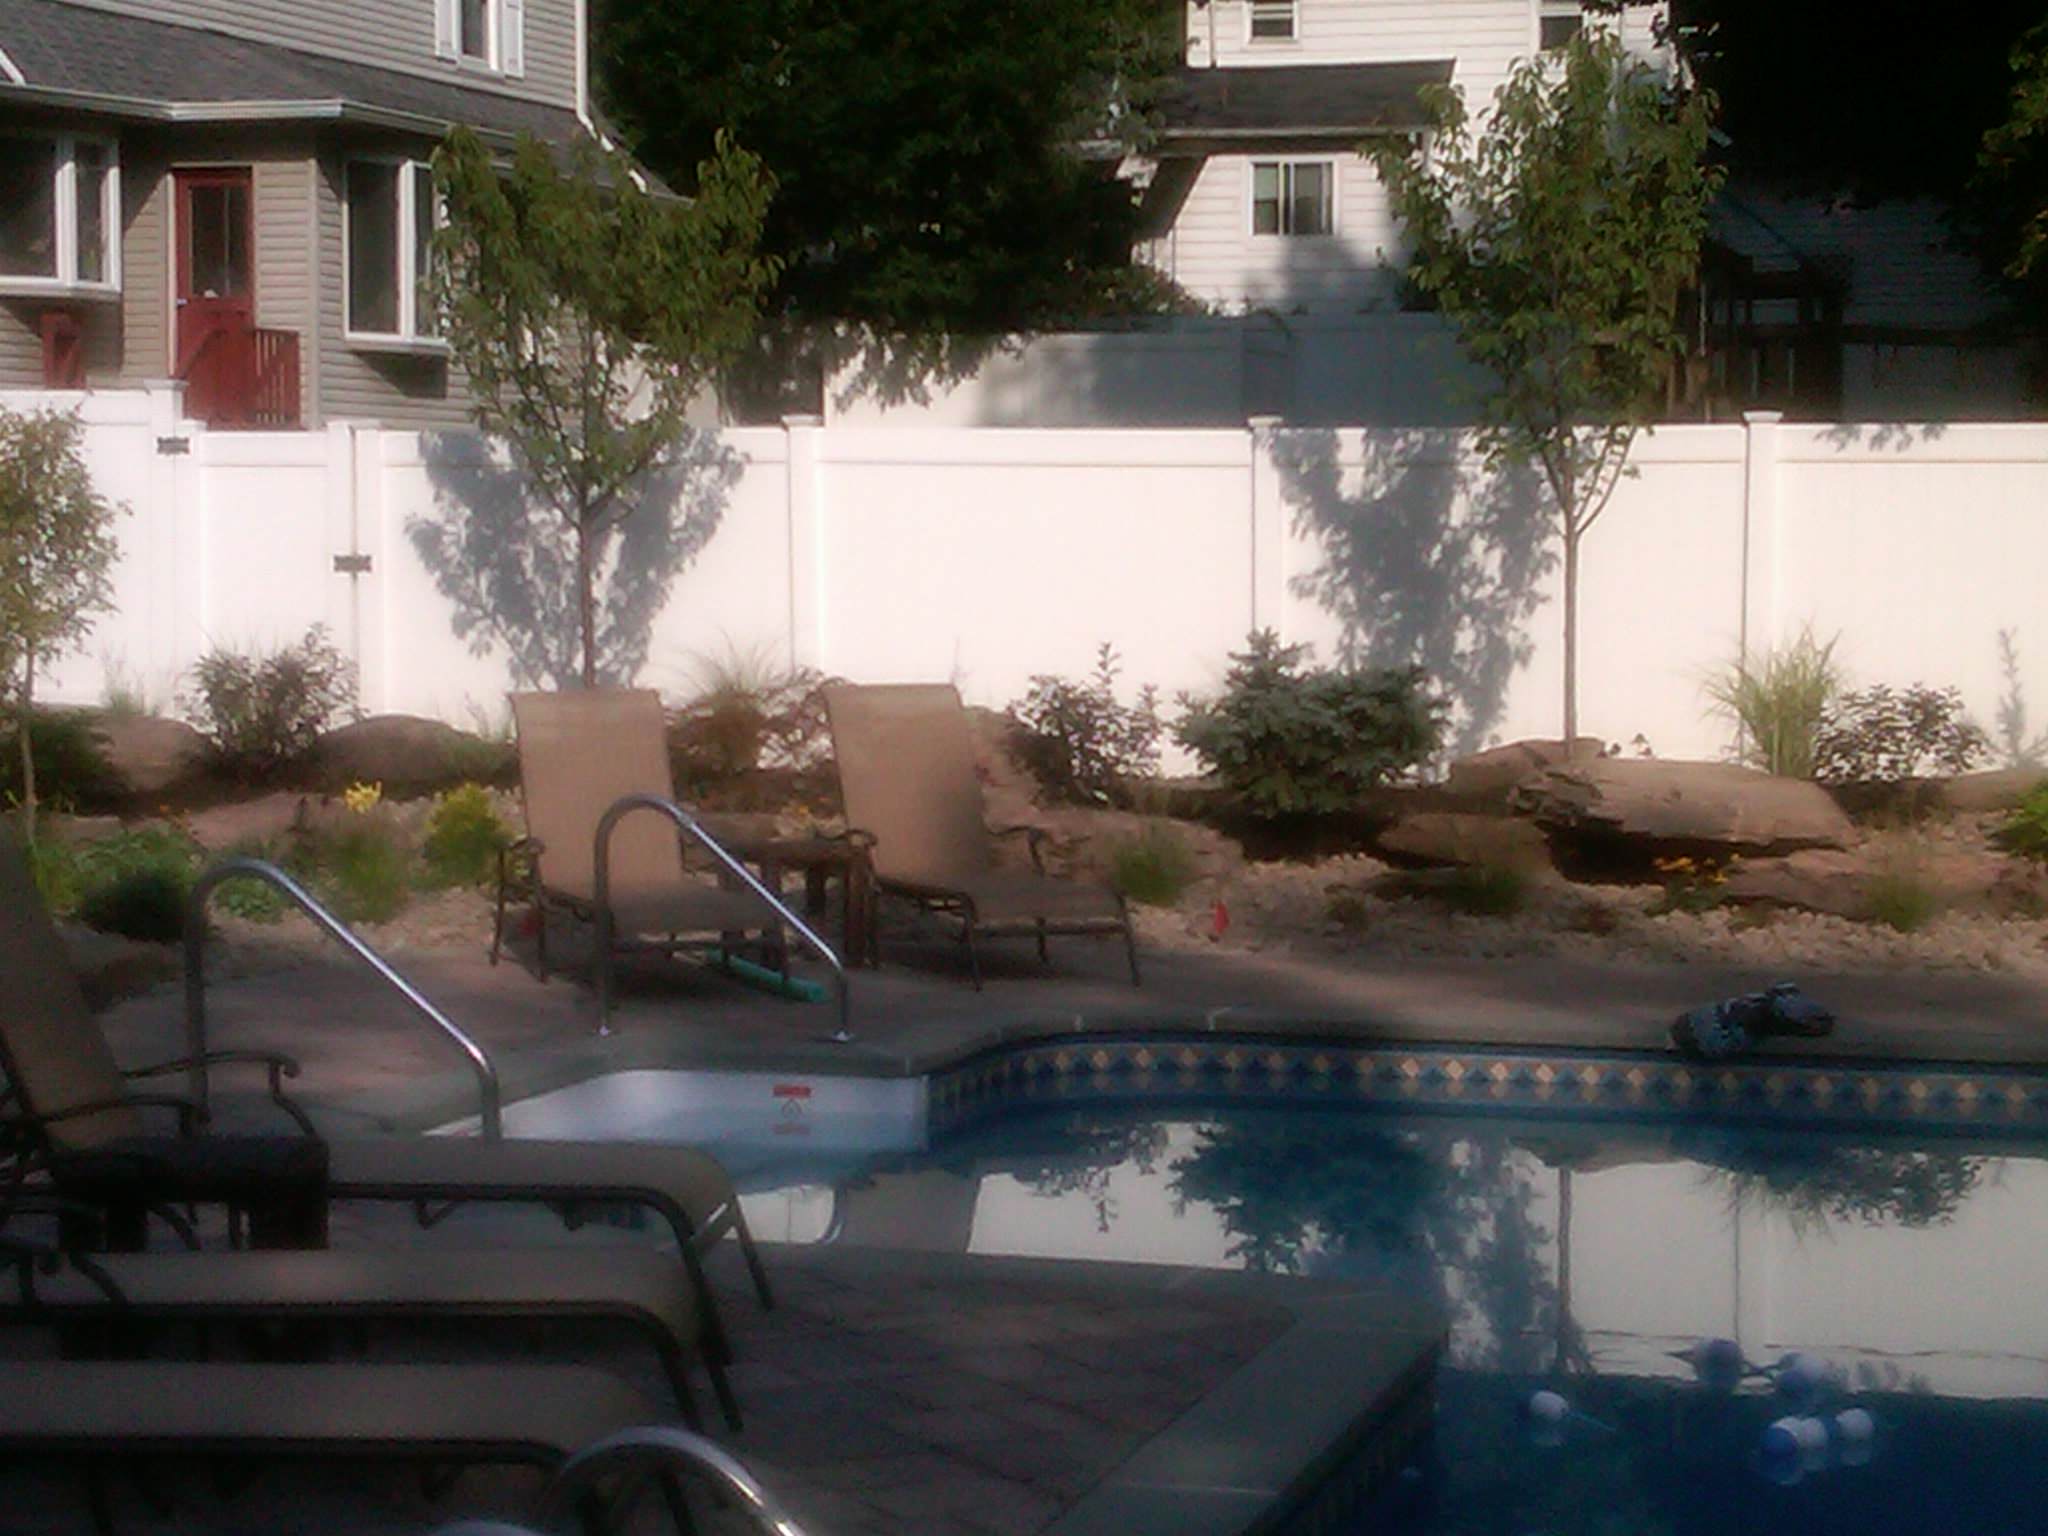 backyard landscape 'firepit''waterfall'tiered patio's pool with bluestone coping